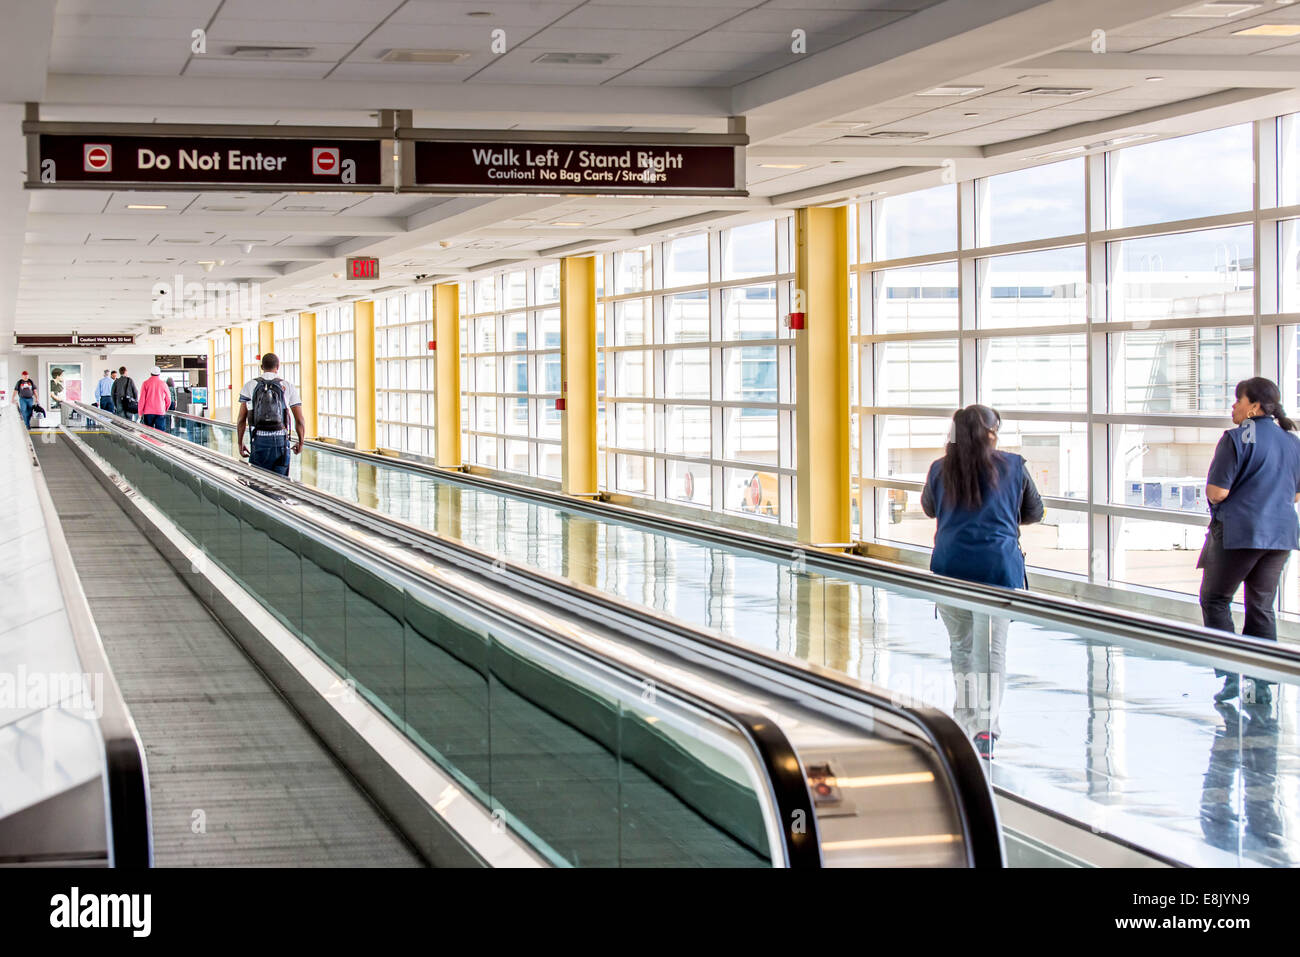 DCA, Reagan National Airport, Washington, DC - Passengers walking through a well lit airport Stock Photo